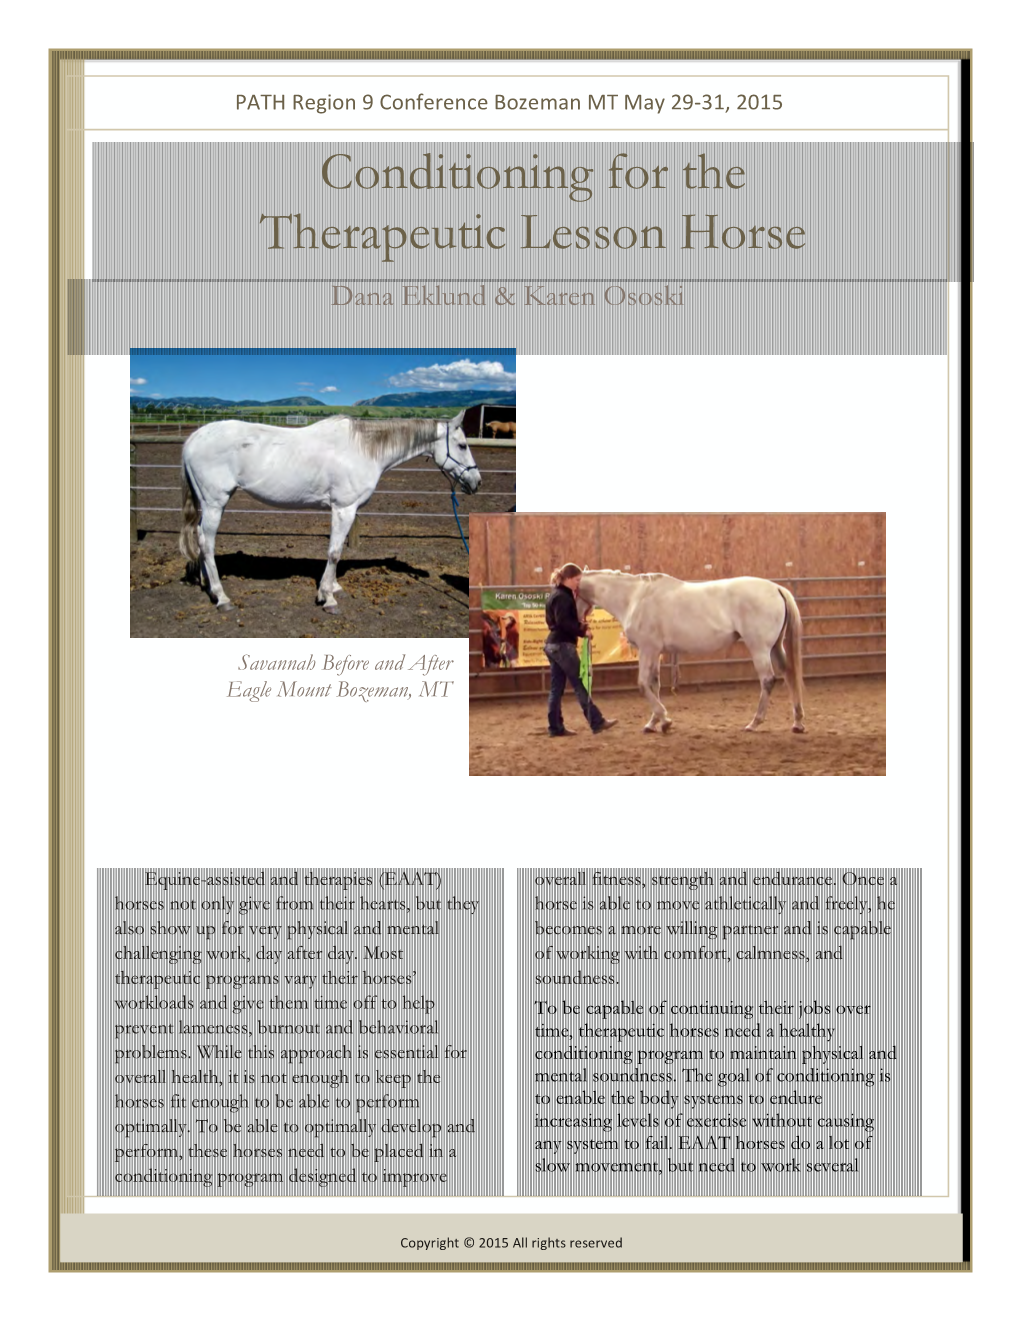 Conditioning for the Therapeutic Lesson Horse Dana Eklund & Karen Ososki